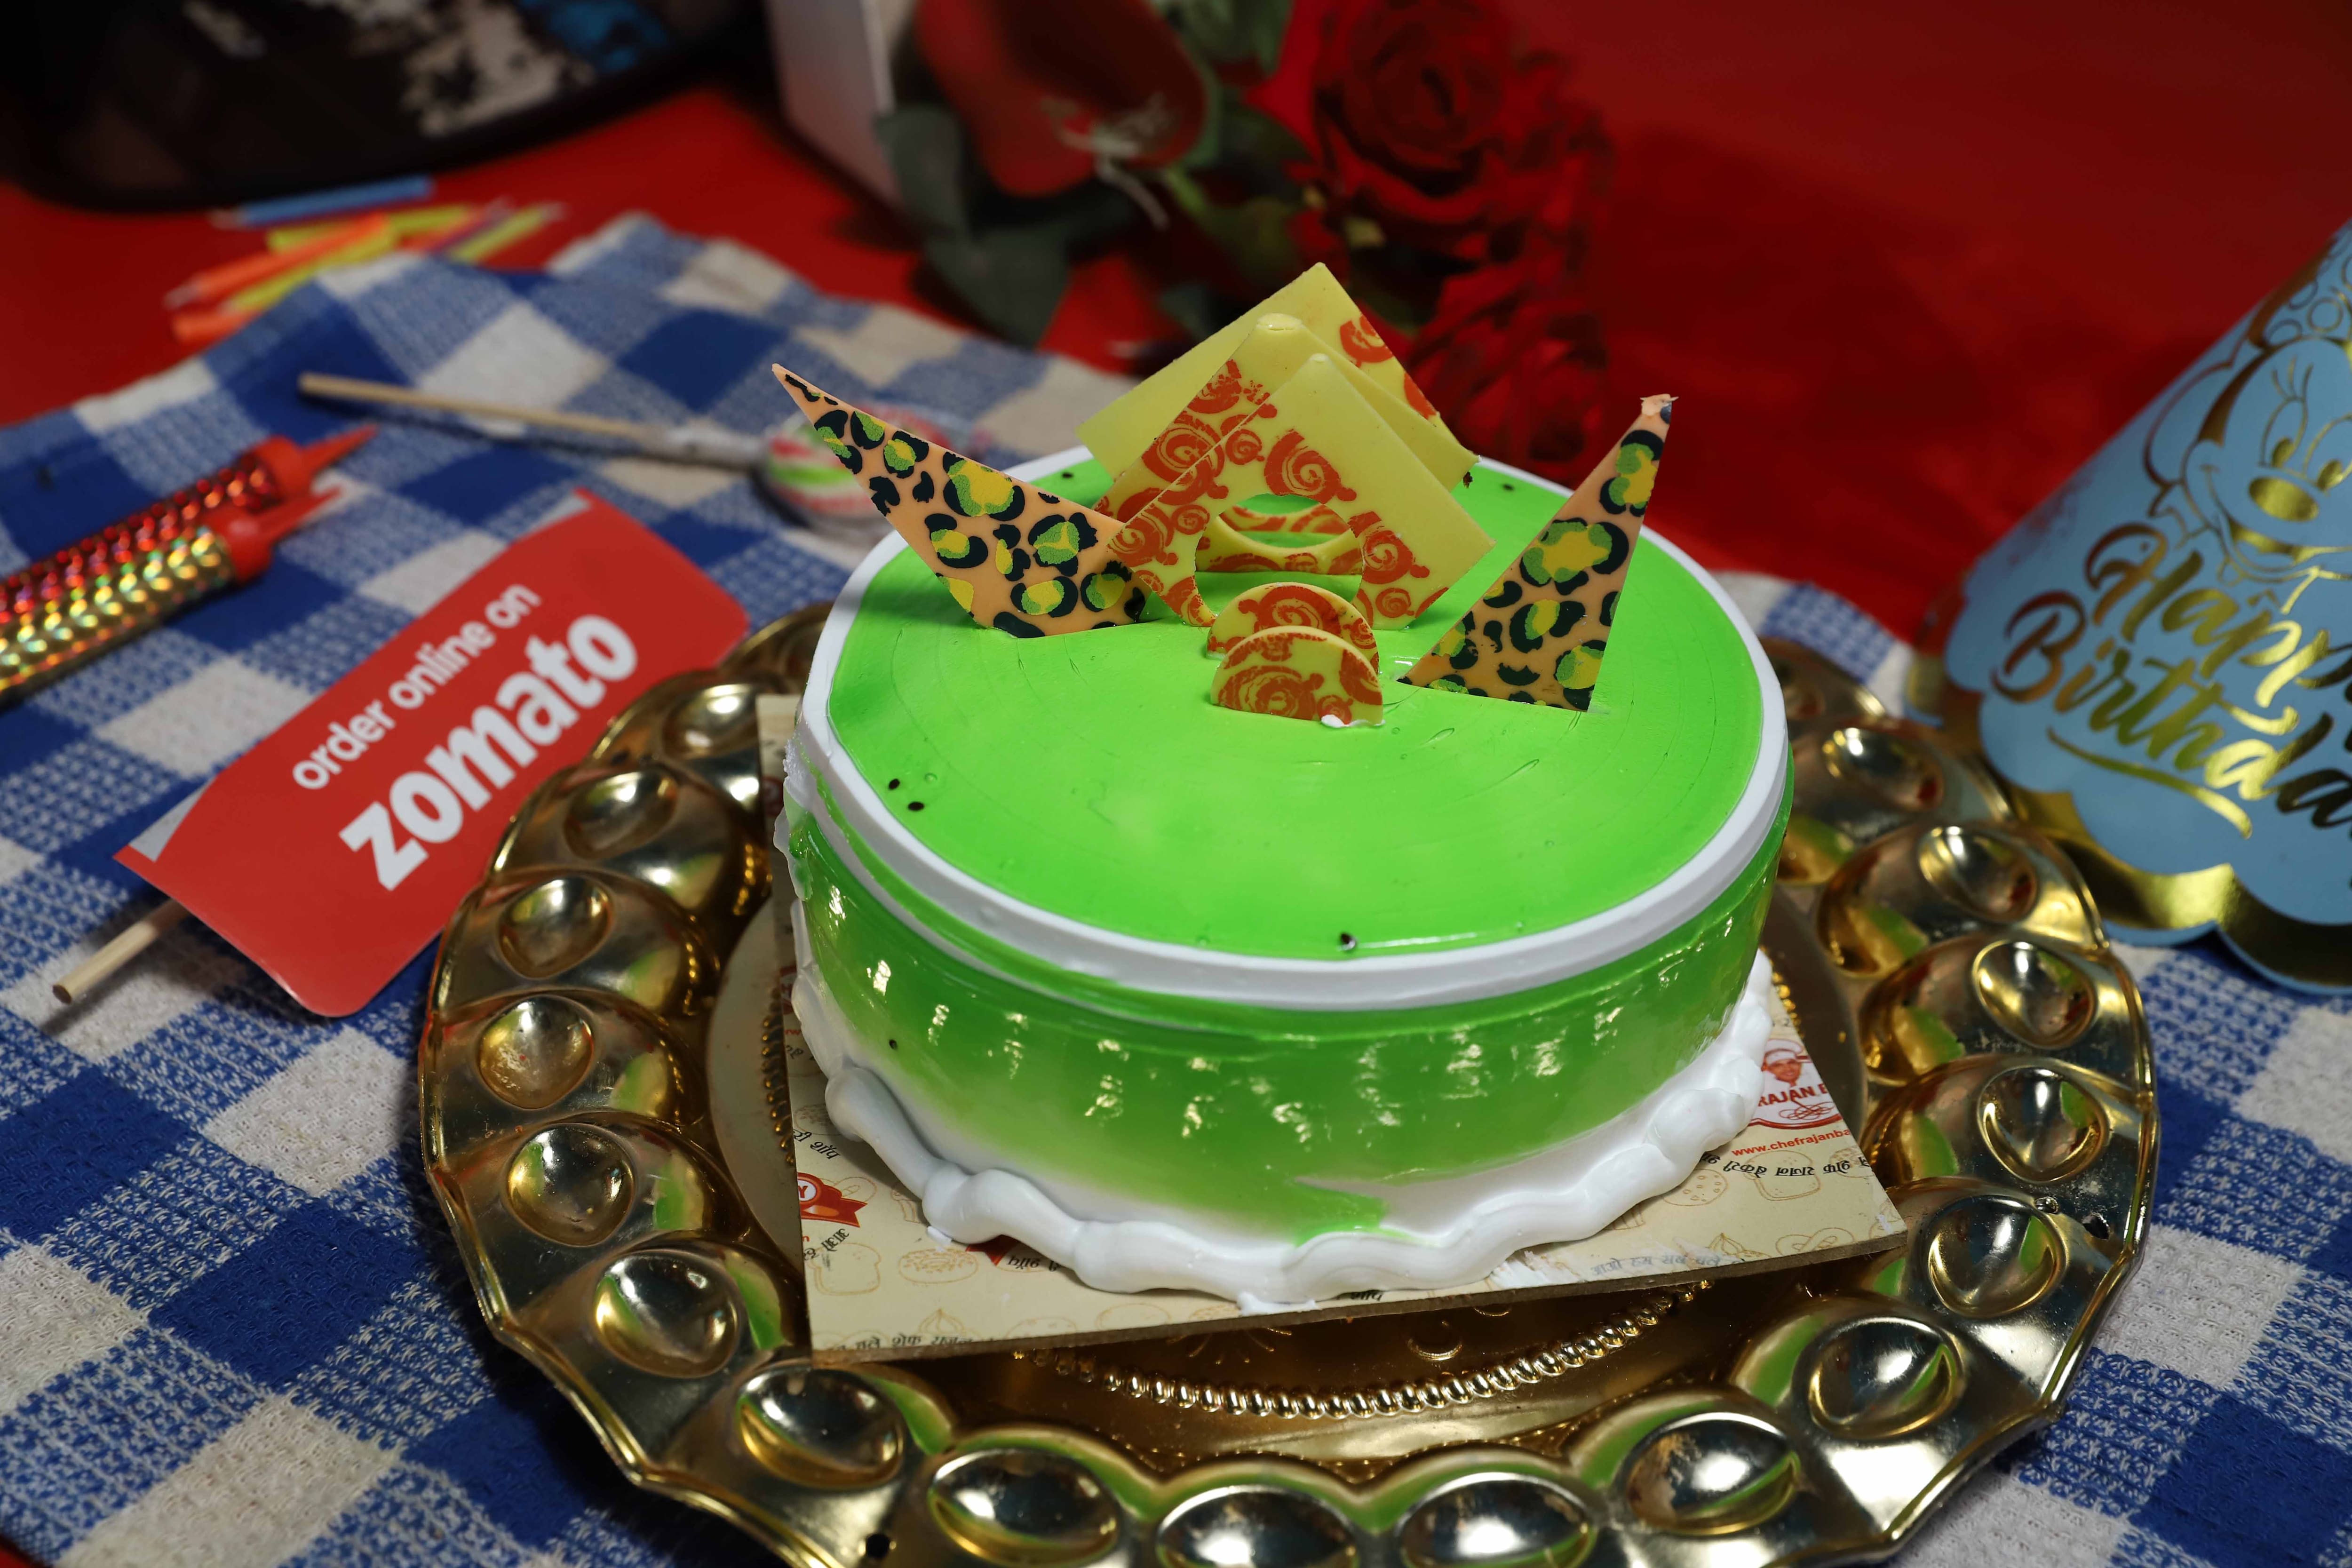 Word Limit' Stumbles Into Customer's Birthday Cake By Zomato